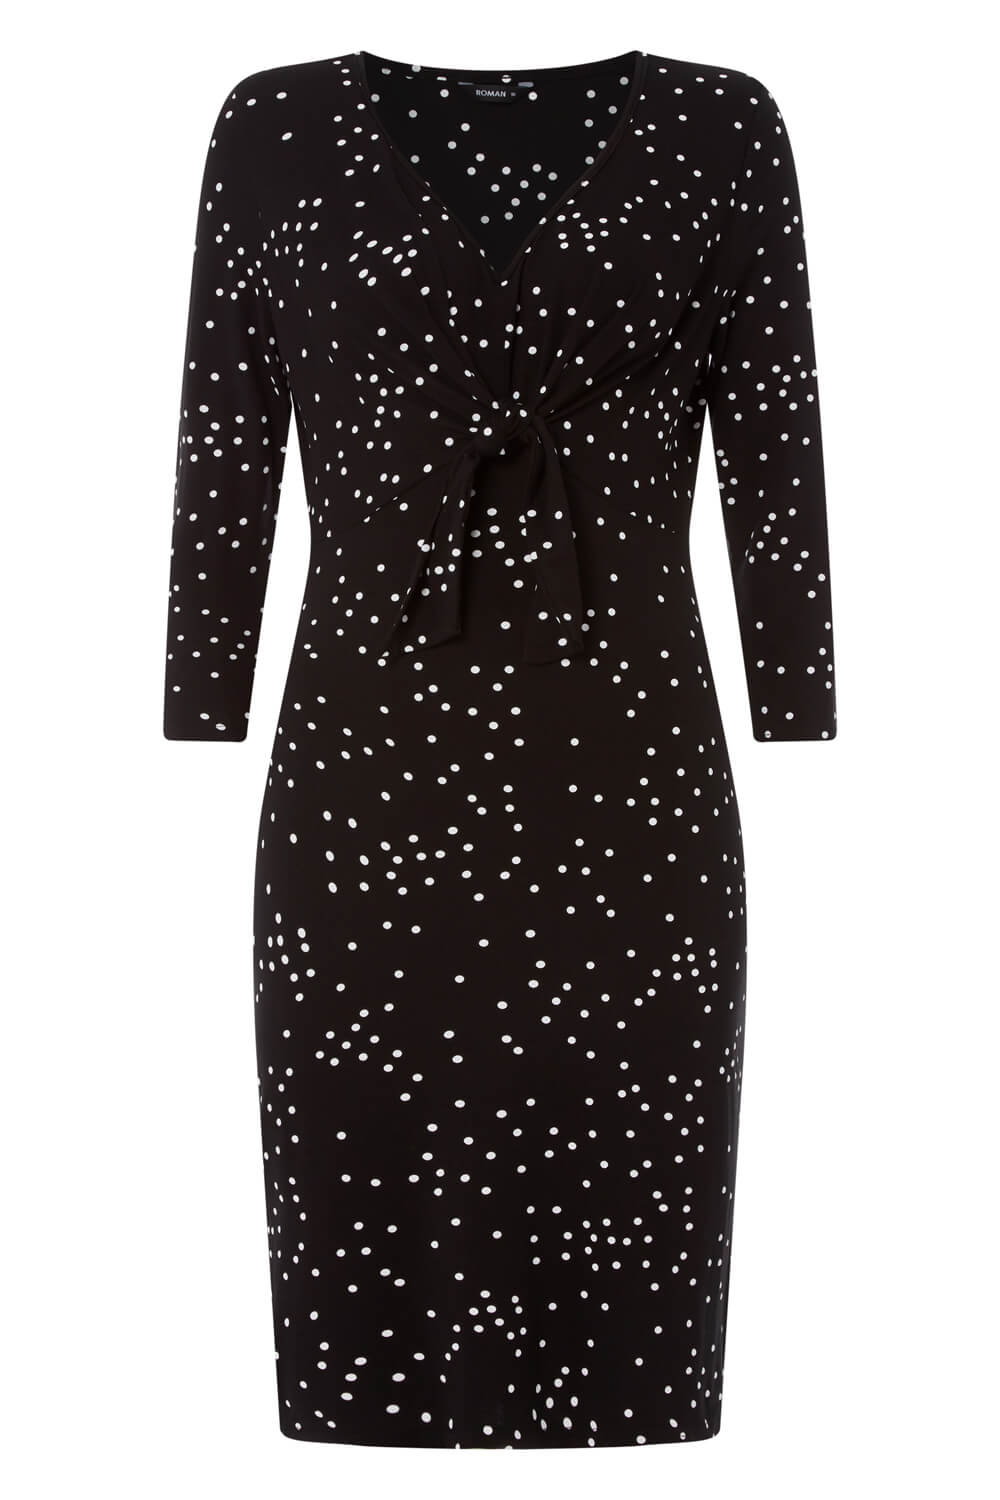 Black Polka Dot Tie Front Dress, Image 5 of 5